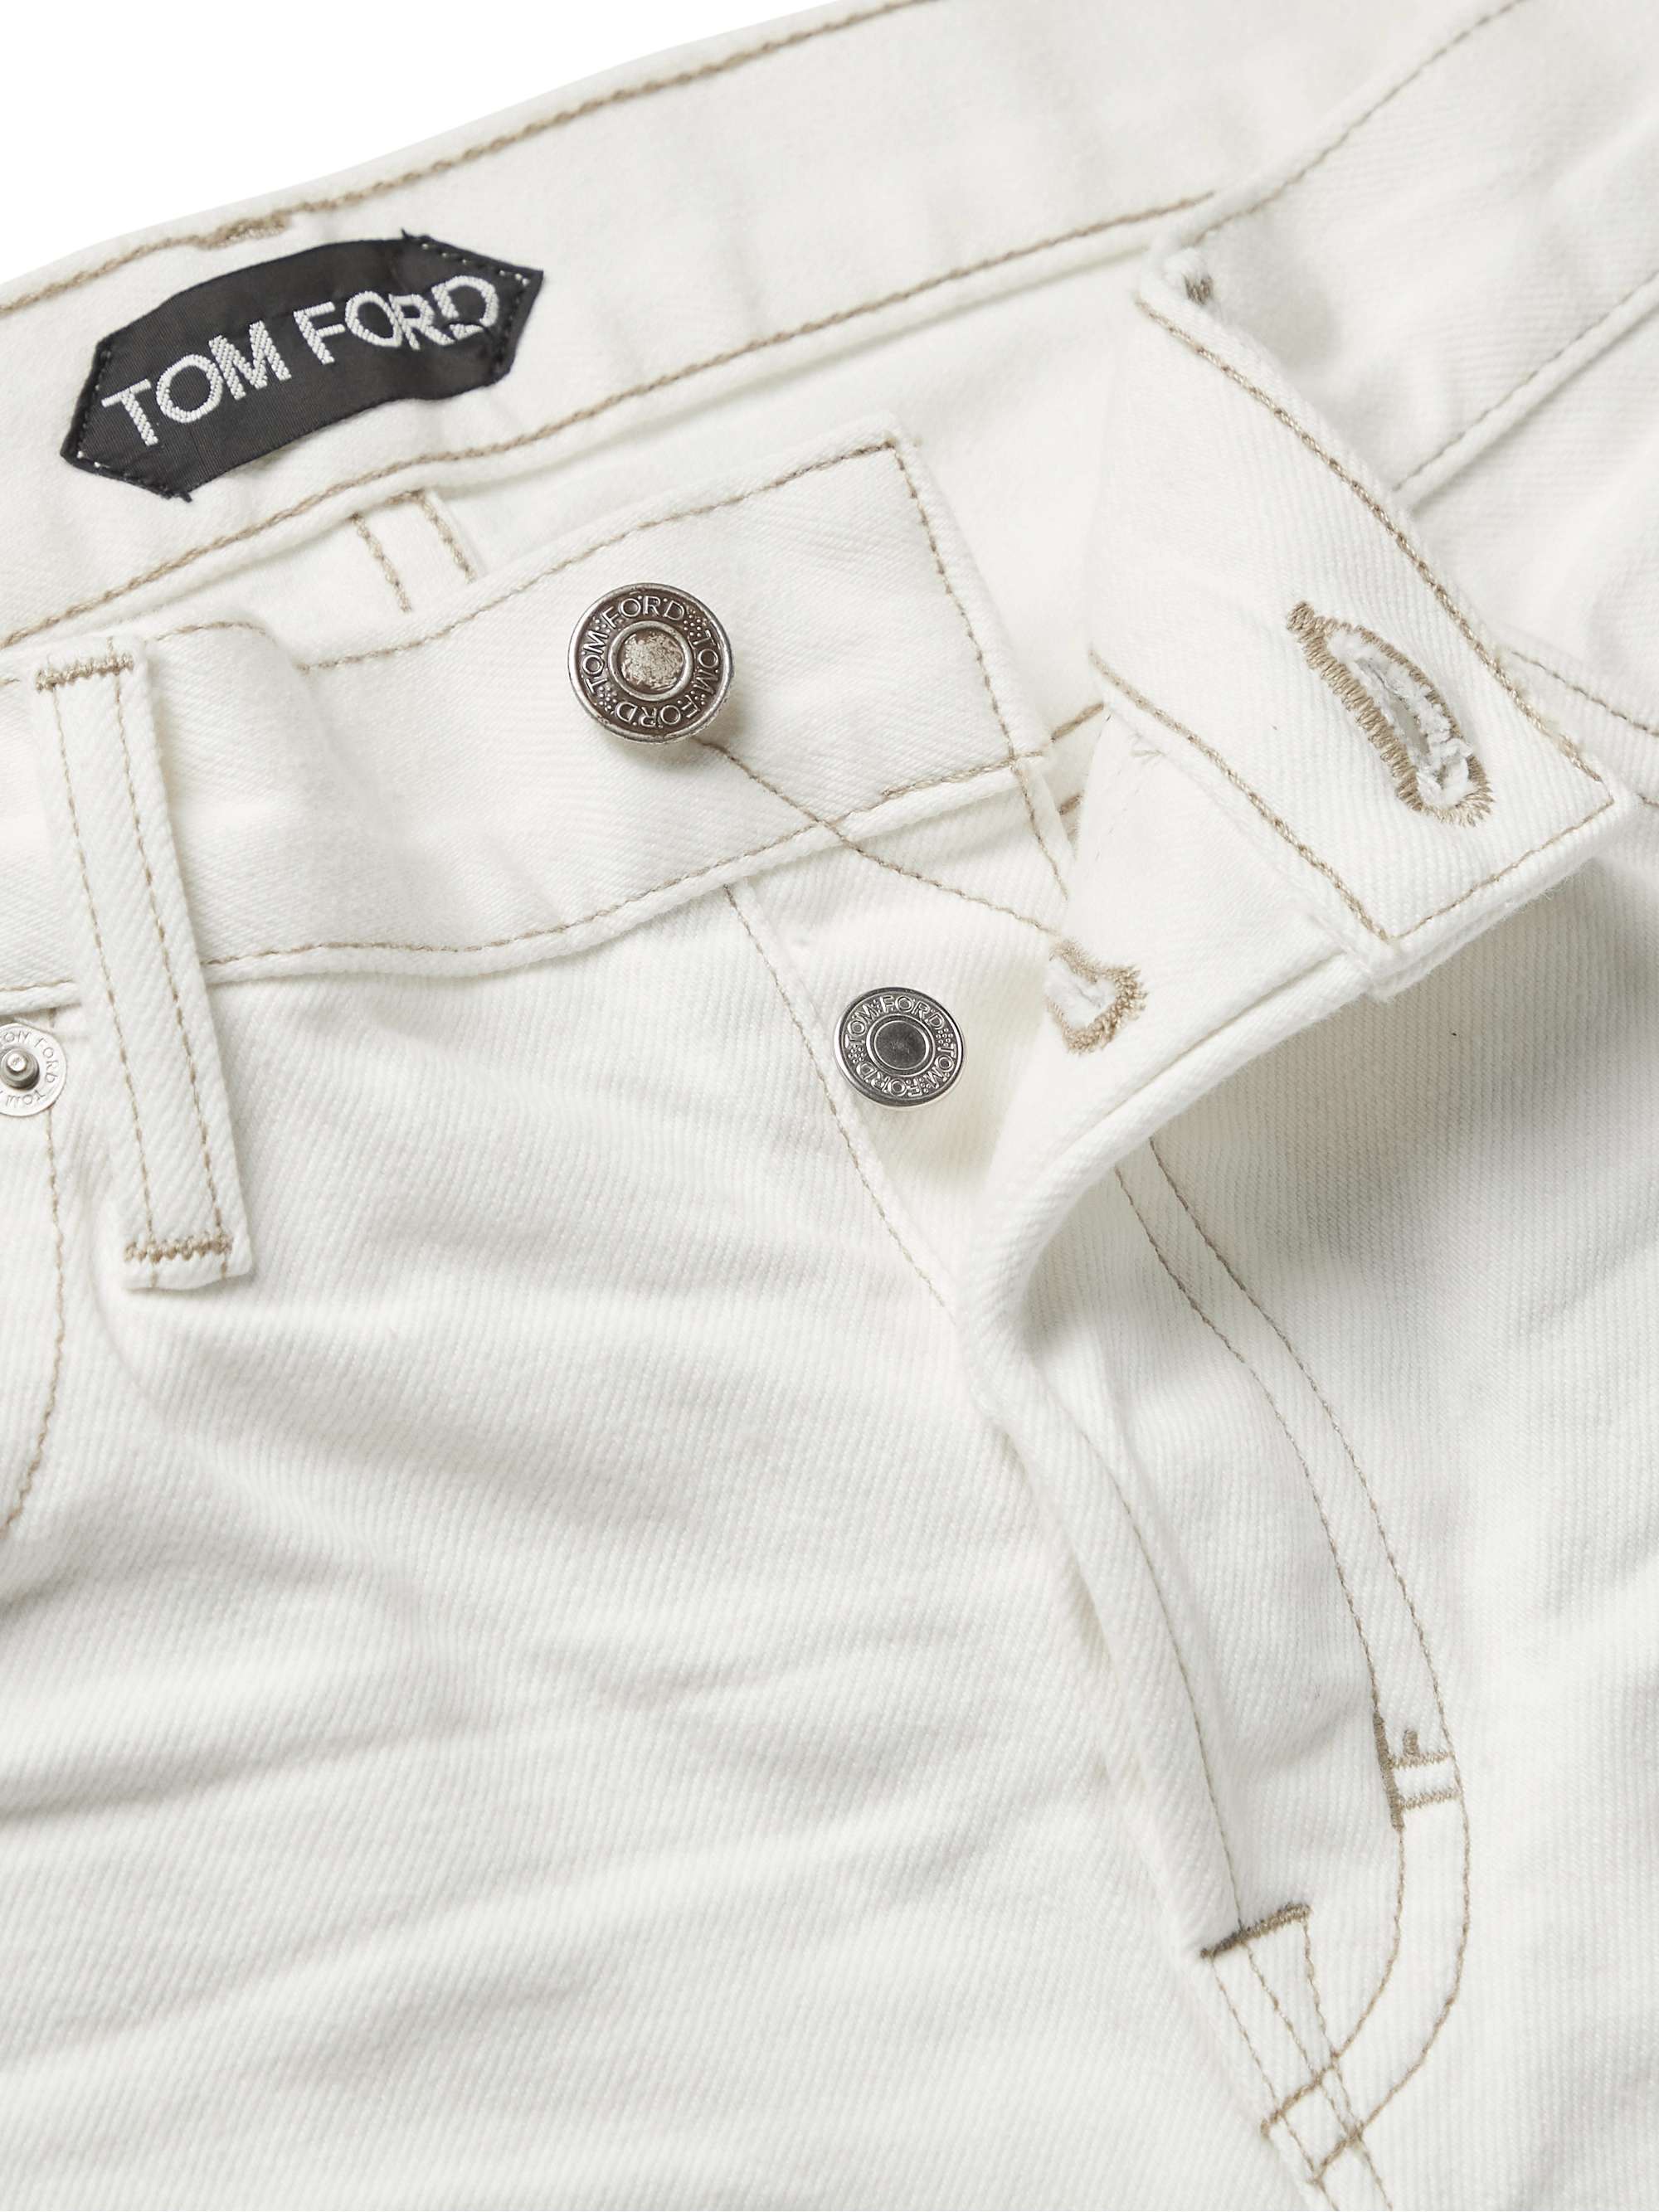 TOM FORD Slim-Fit Selvedge Denim Jeans